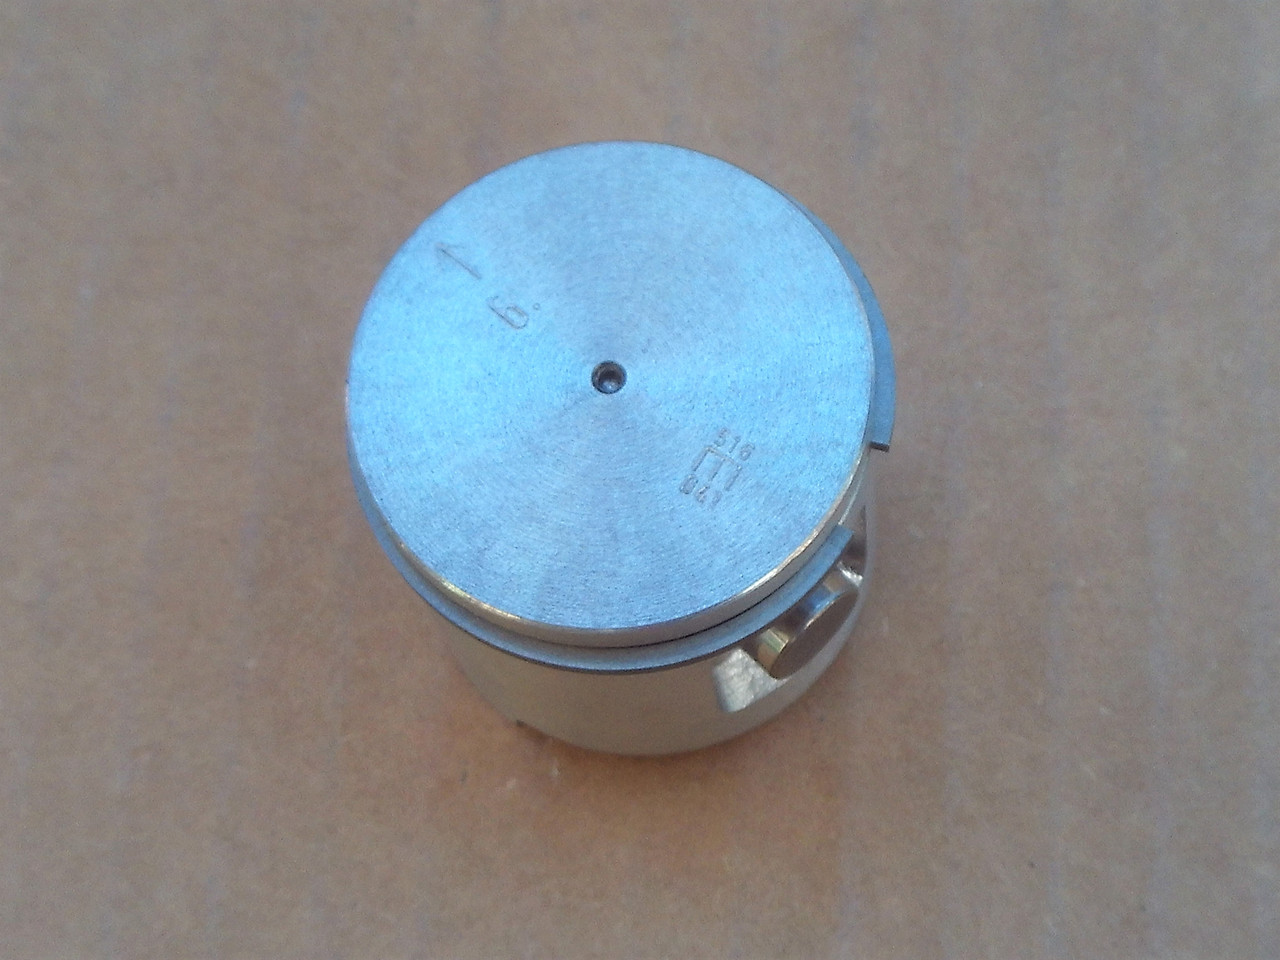 Stihl Piston Cylinder Ring Wrist Pin Kit 11200201200 1120-020-1200 2 Bolt Cylinder